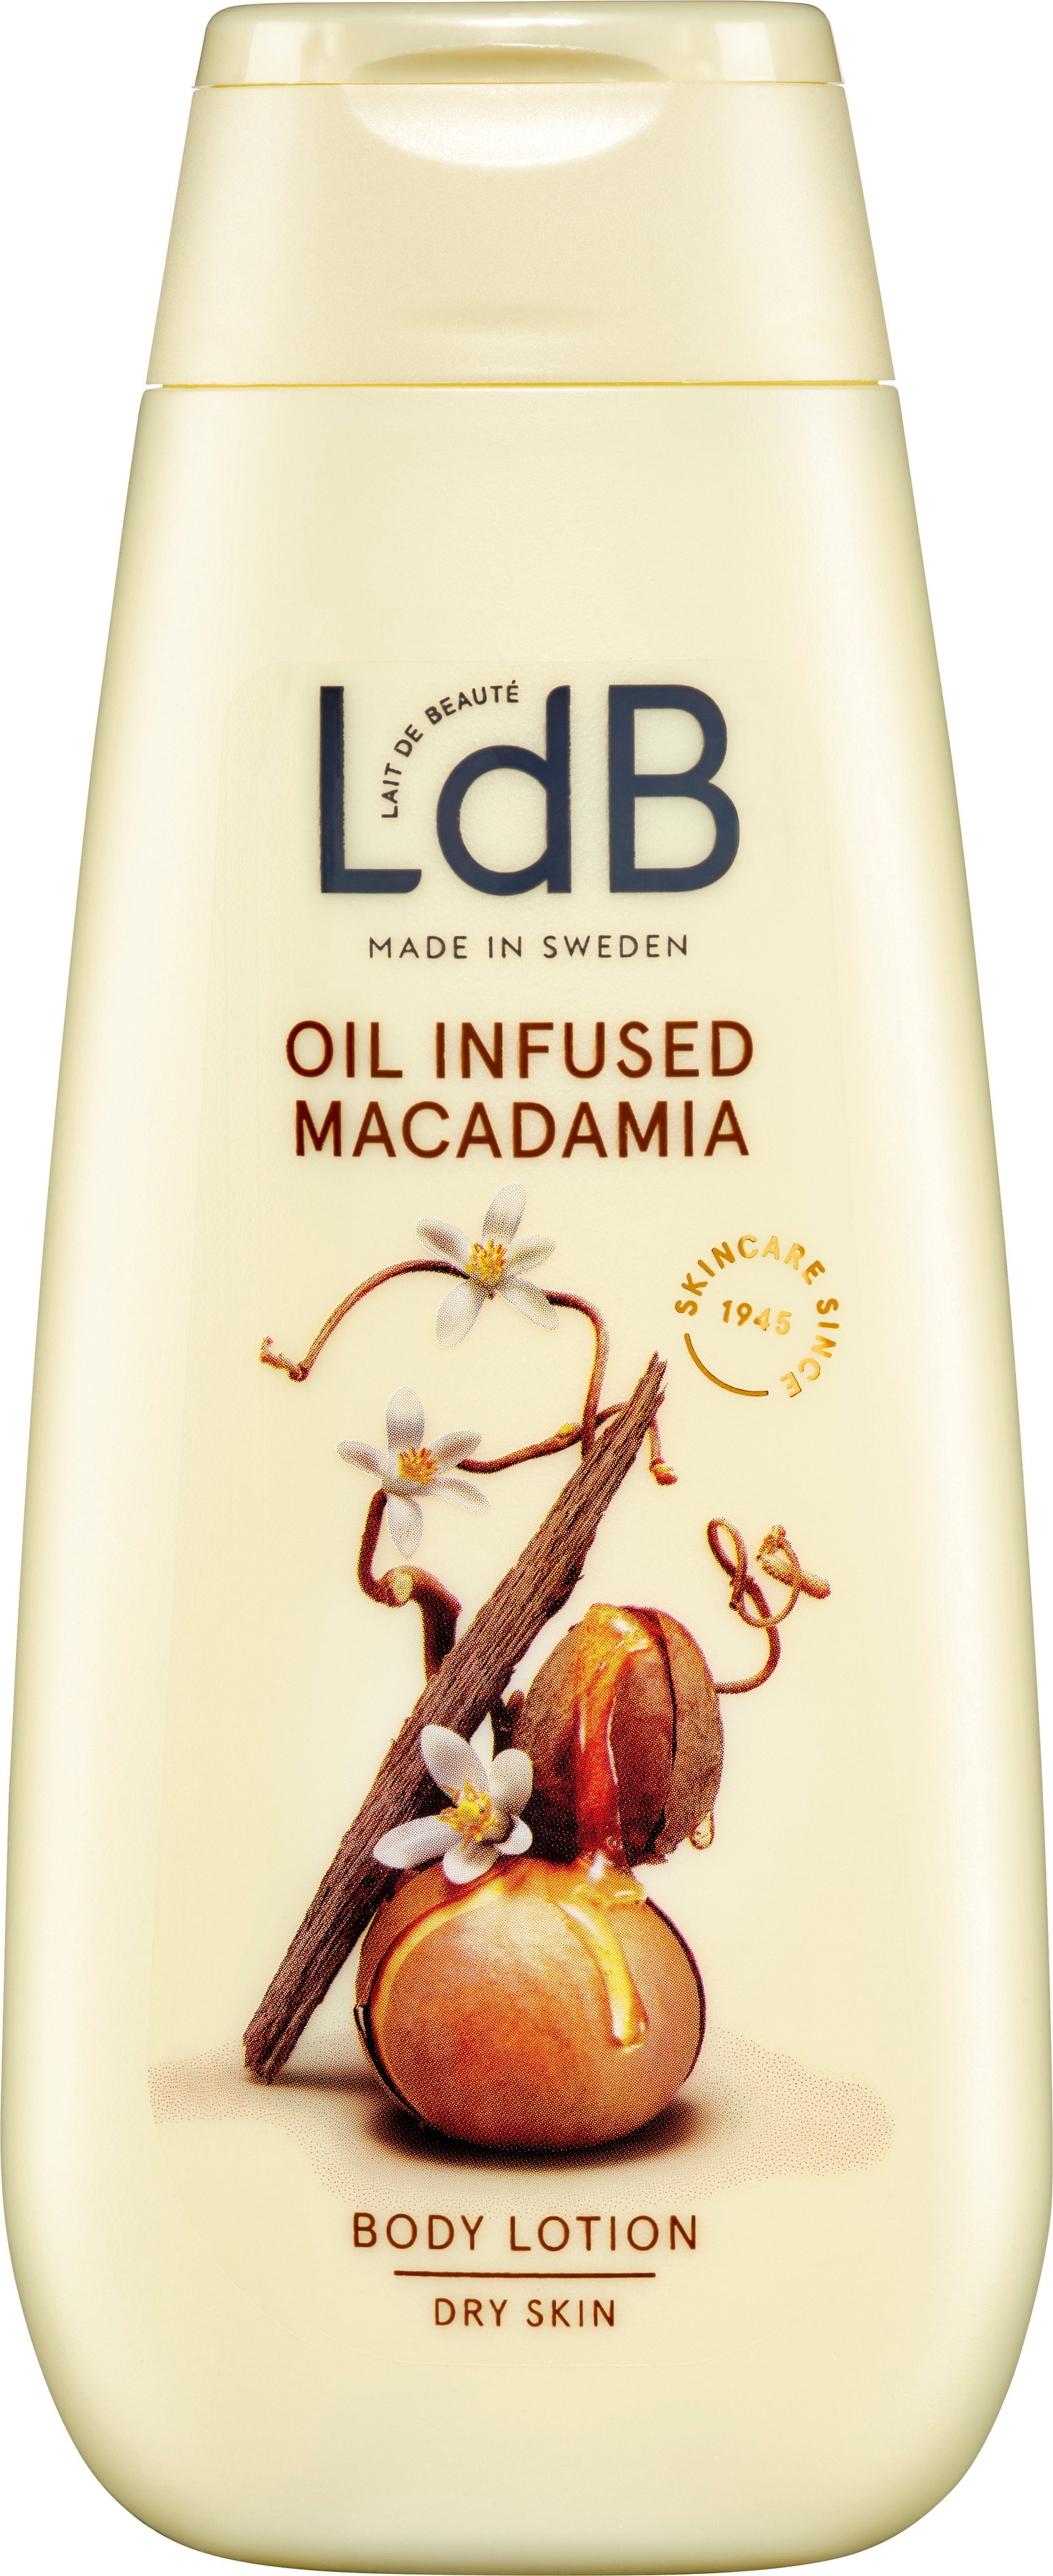 Ldb Oil Infused Macadamia Body Lotion 250ml